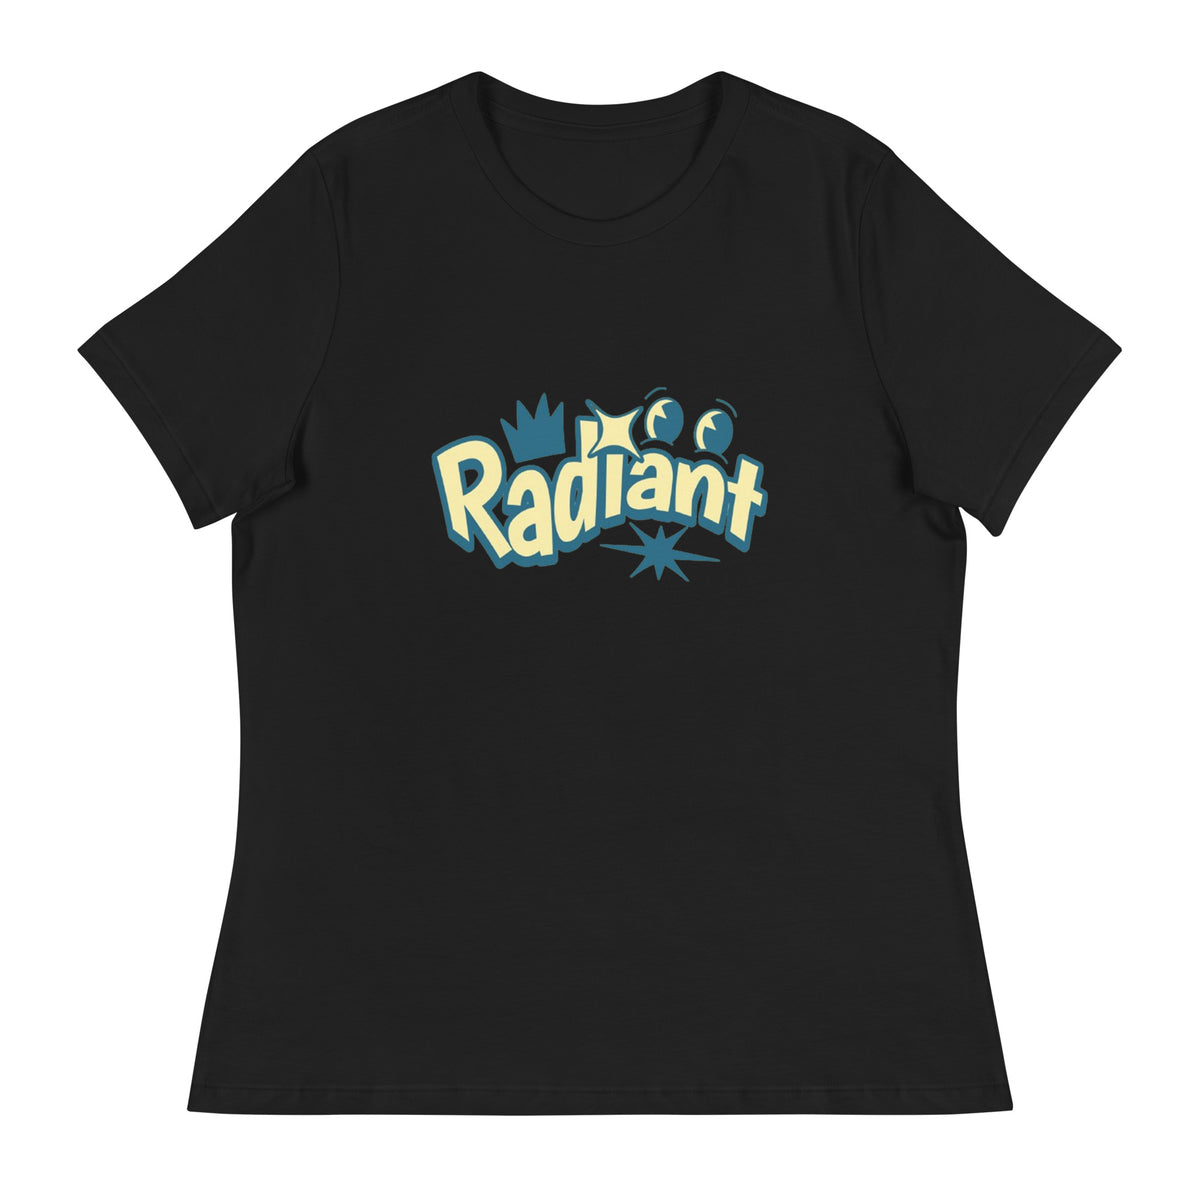 Radiant T-Shirts